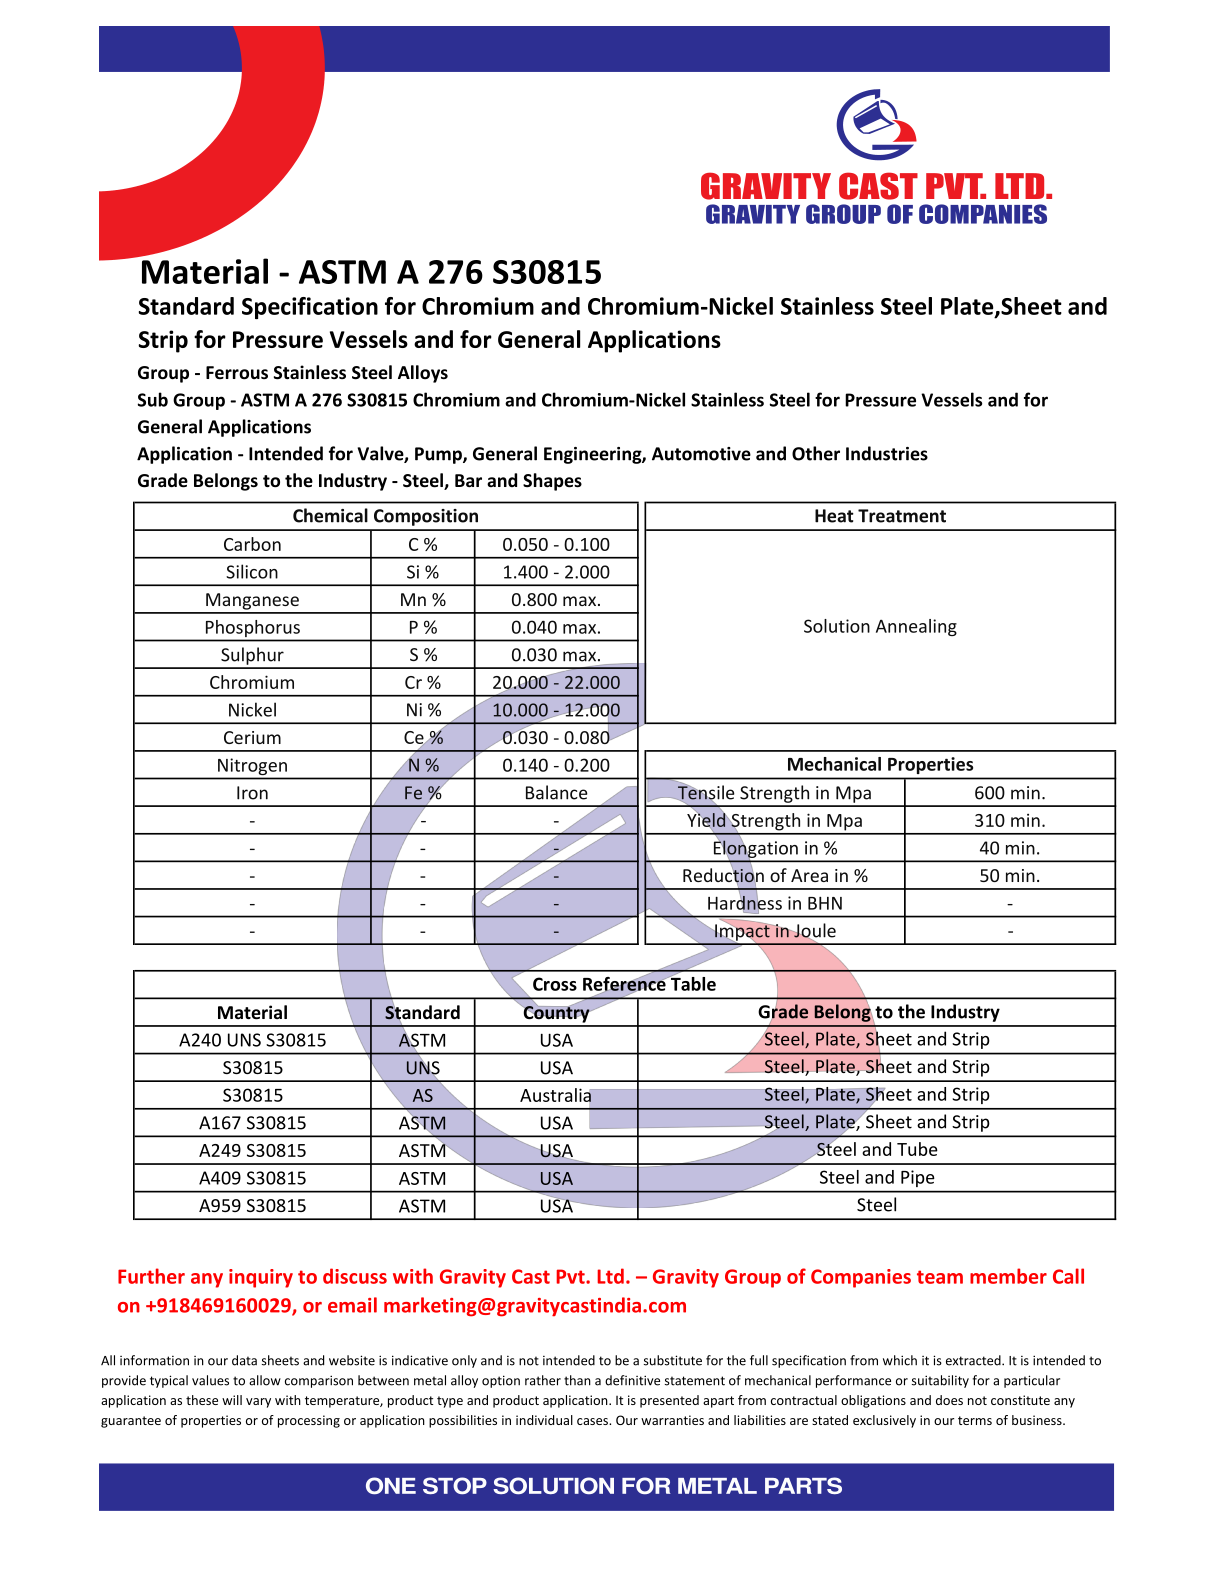 ASTM A 276 S30815.pdf